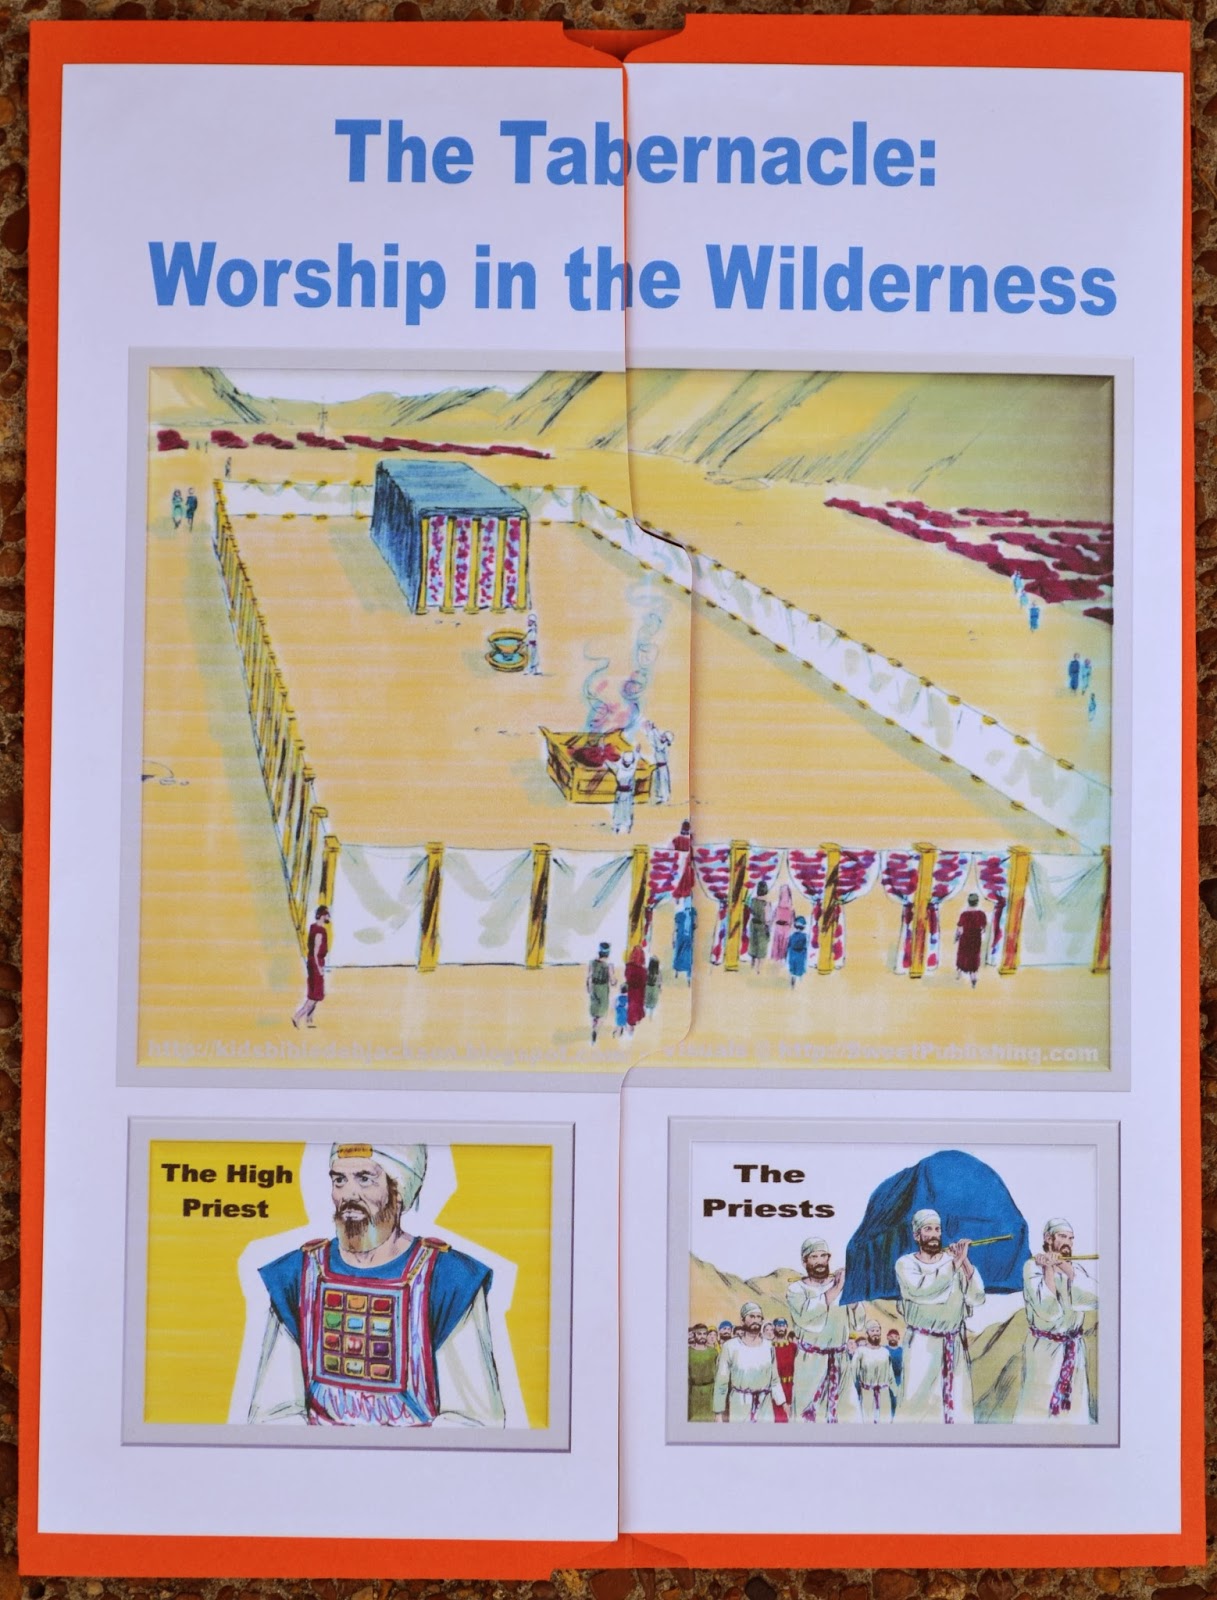 http://kidsbibledebjackson.blogspot.com/2013/11/moses-tabernacle-worship-in-wilderness.html